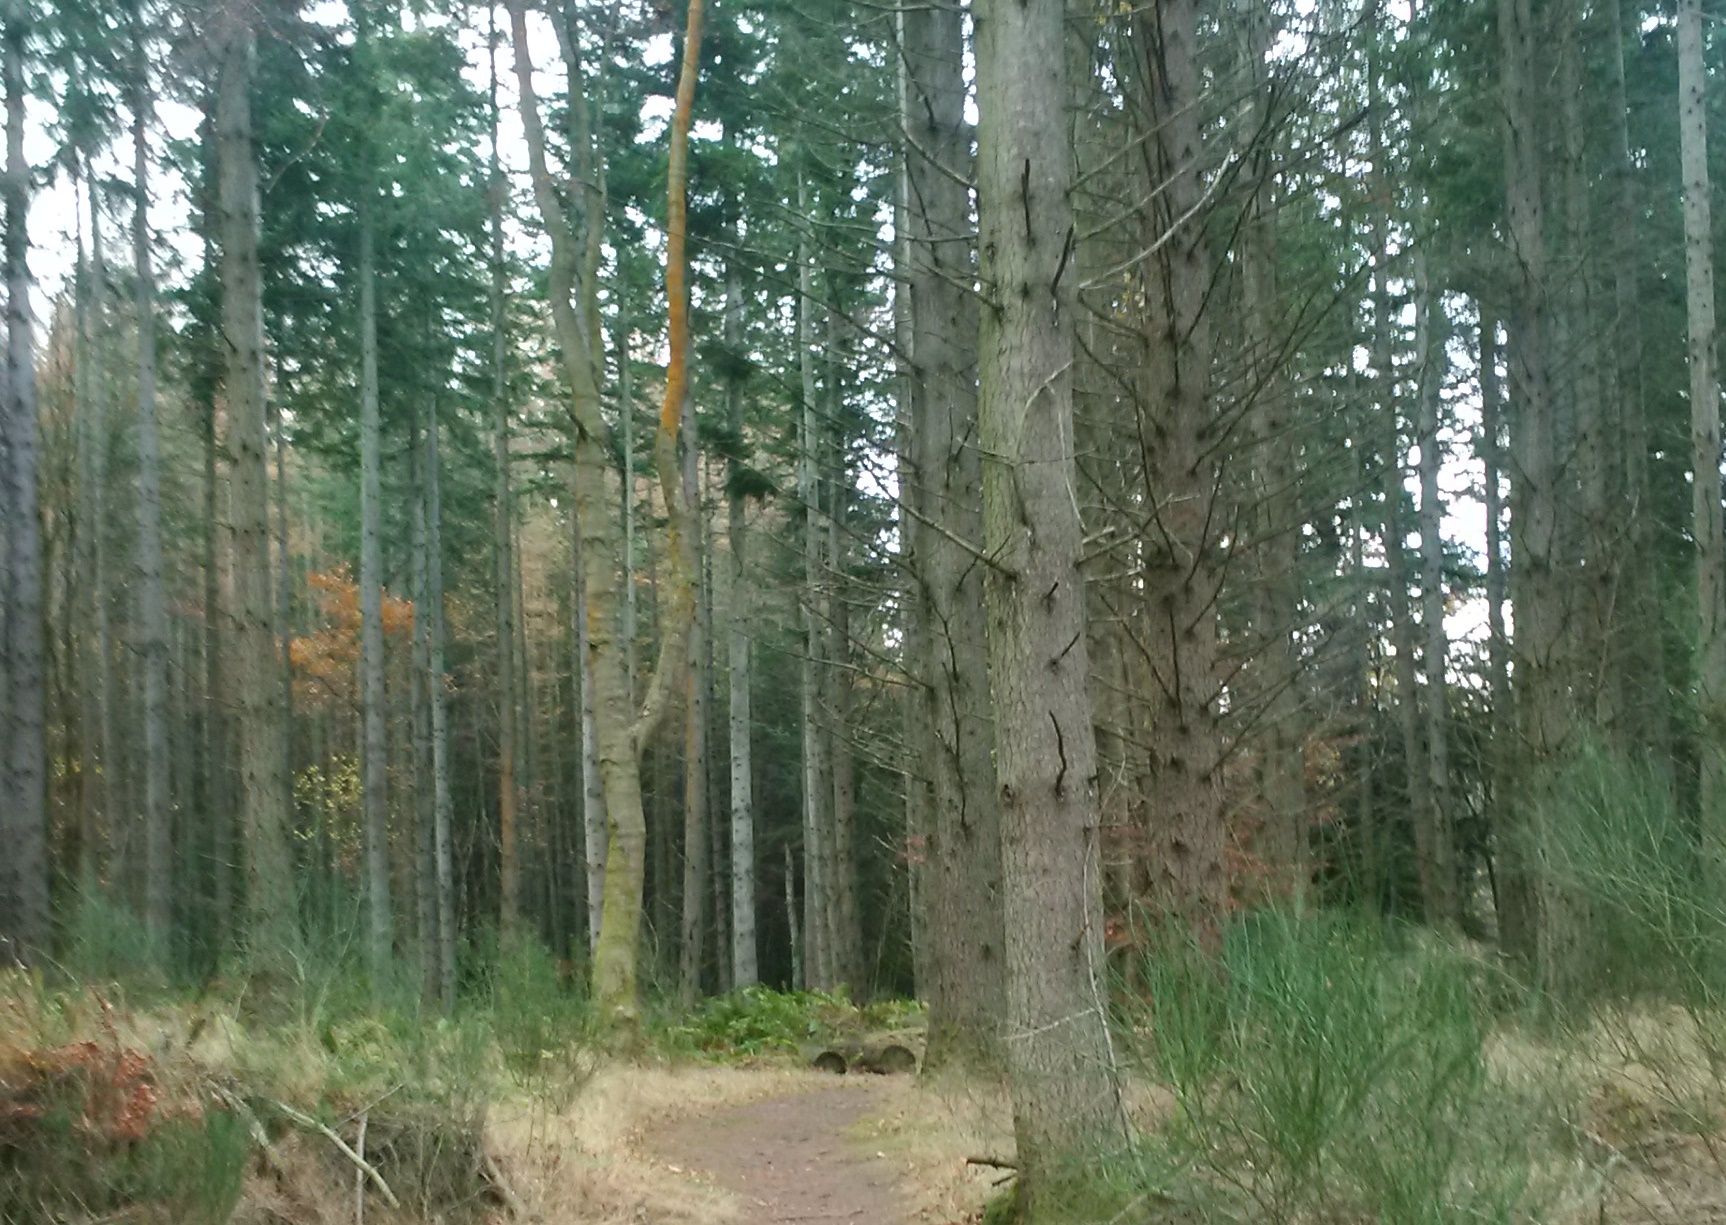 A footpath leading through a conifer forest